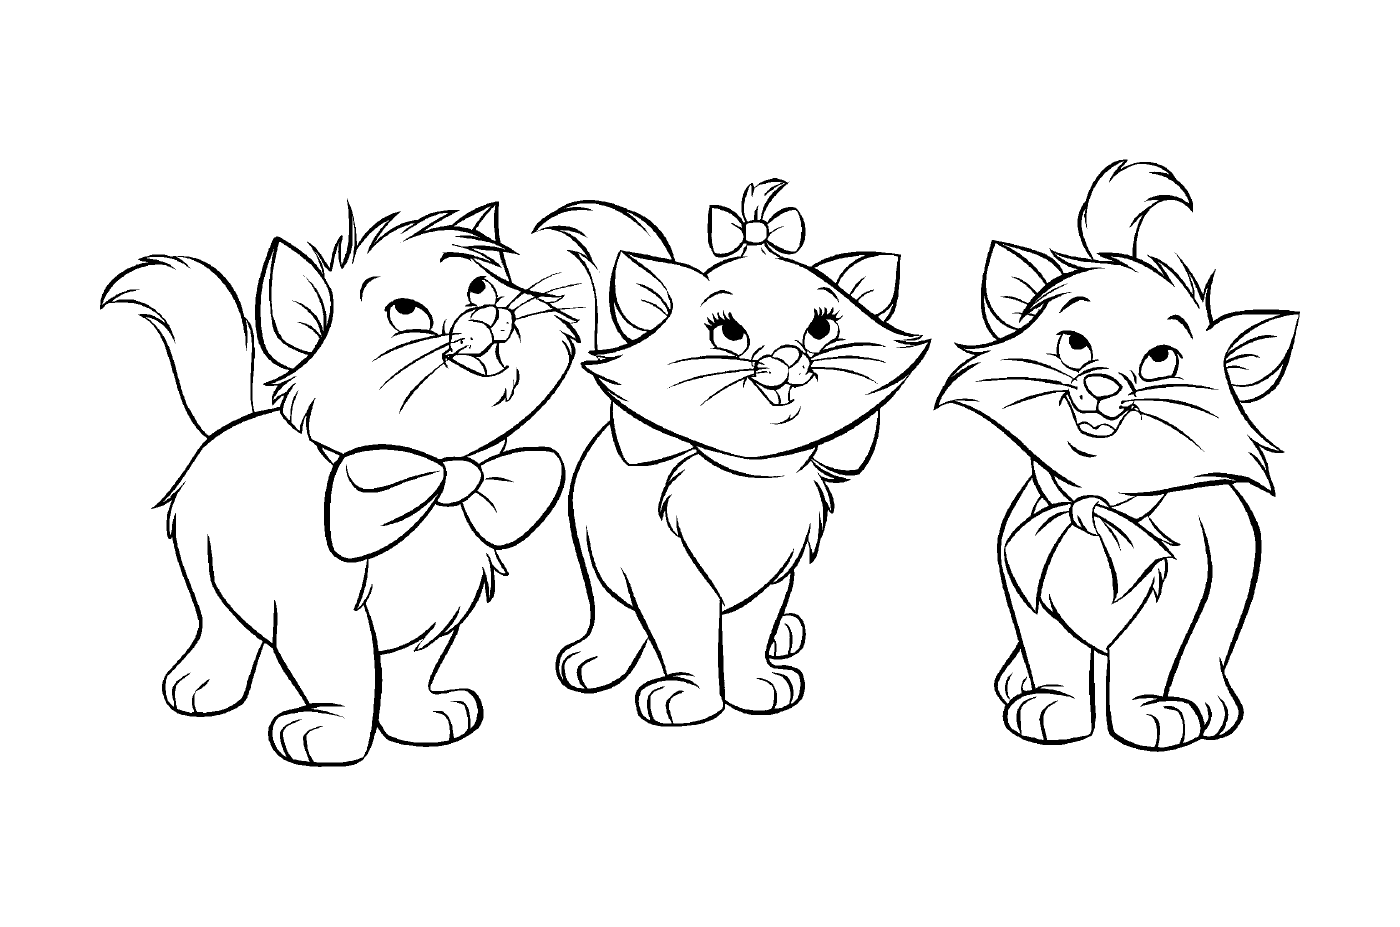  Un grupo de tres gatos de pie juntos 